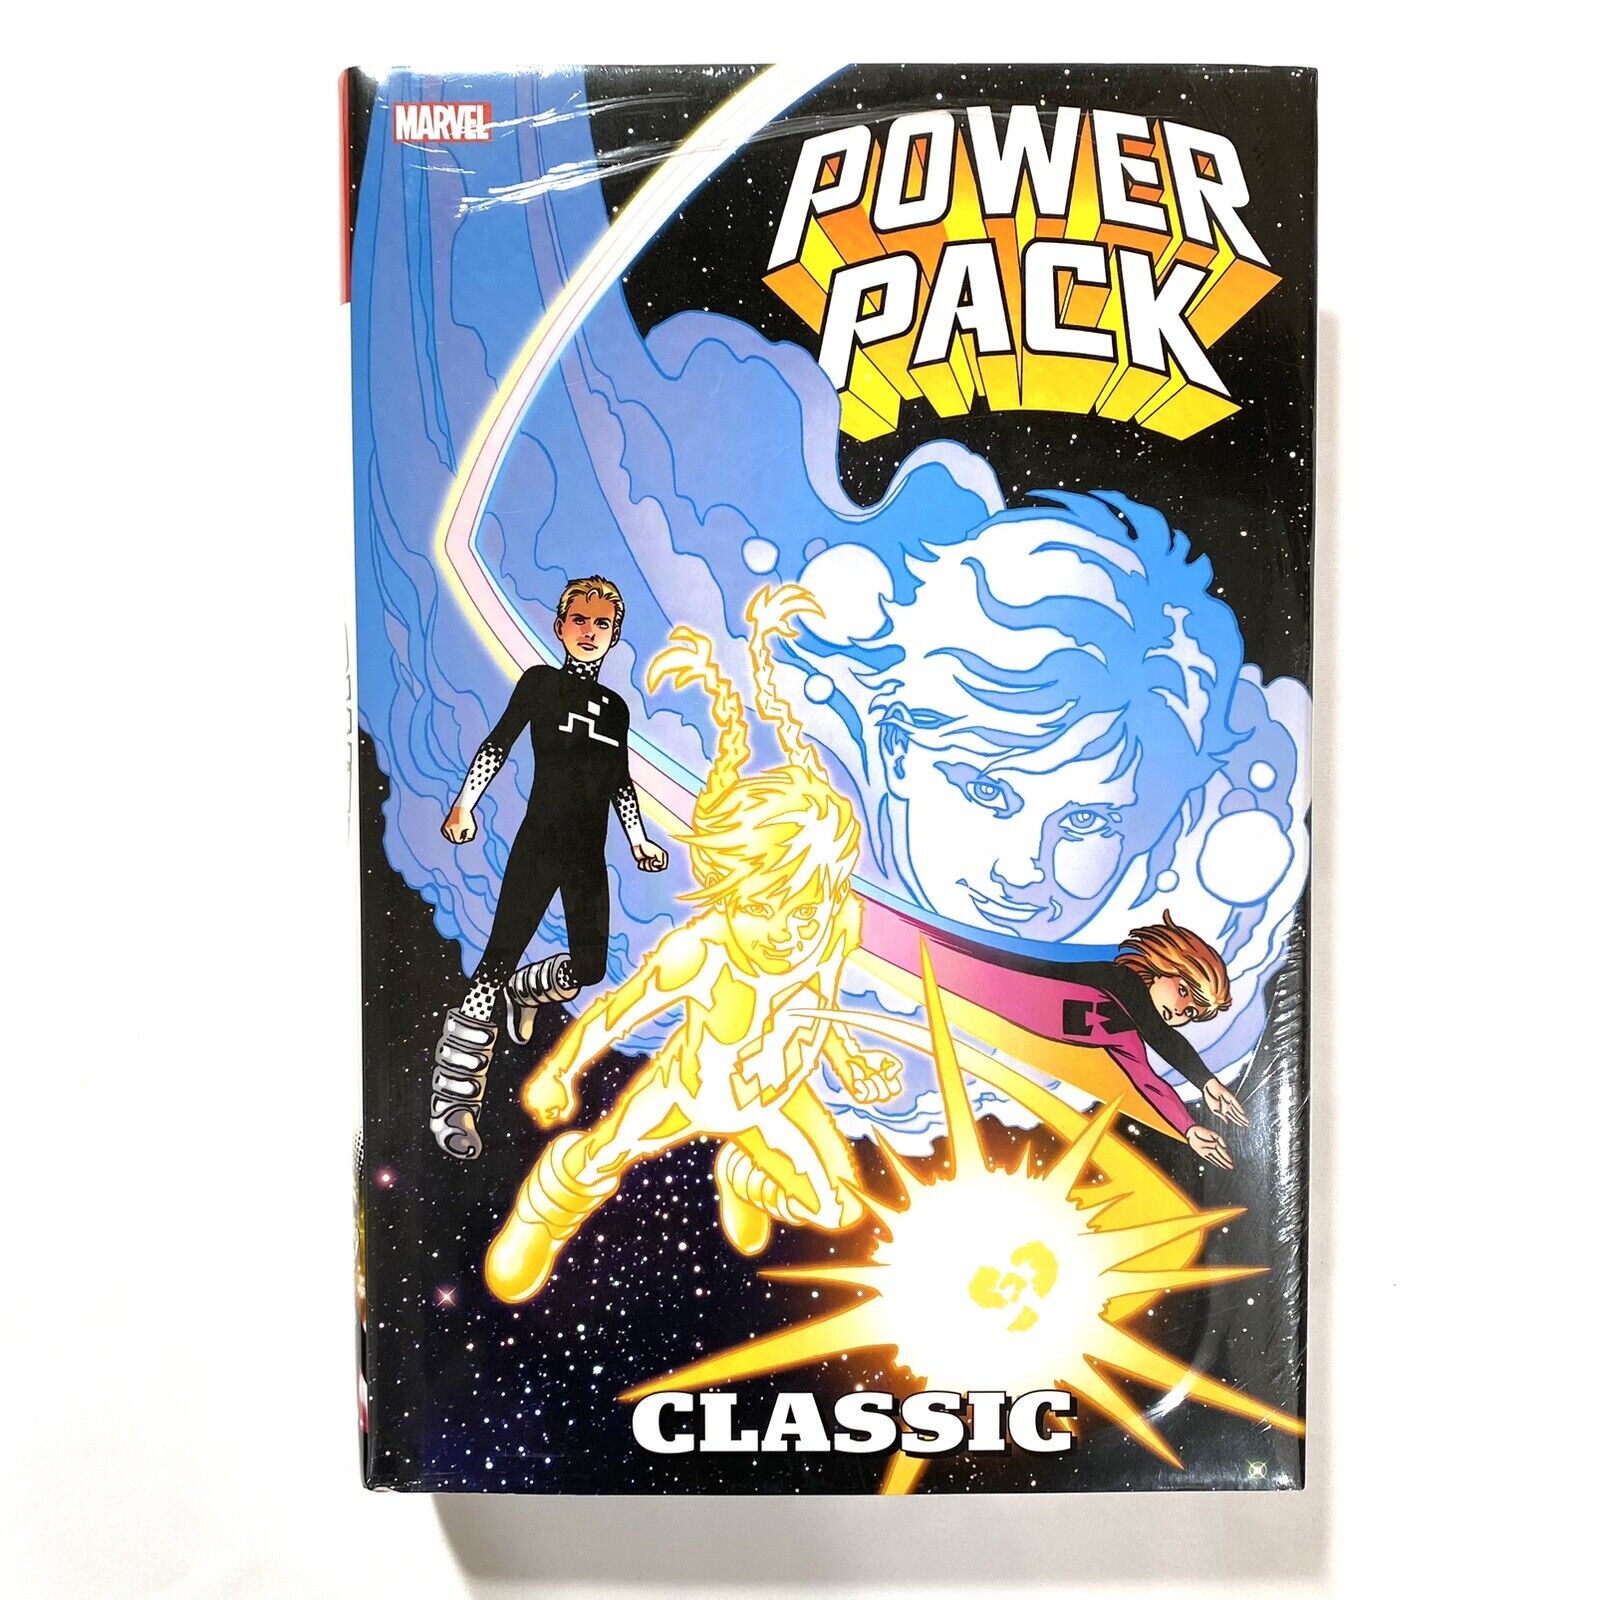 Power Pack Classic Omnibus Vol 2 Marvel Brand New Sealed Brigman Variant